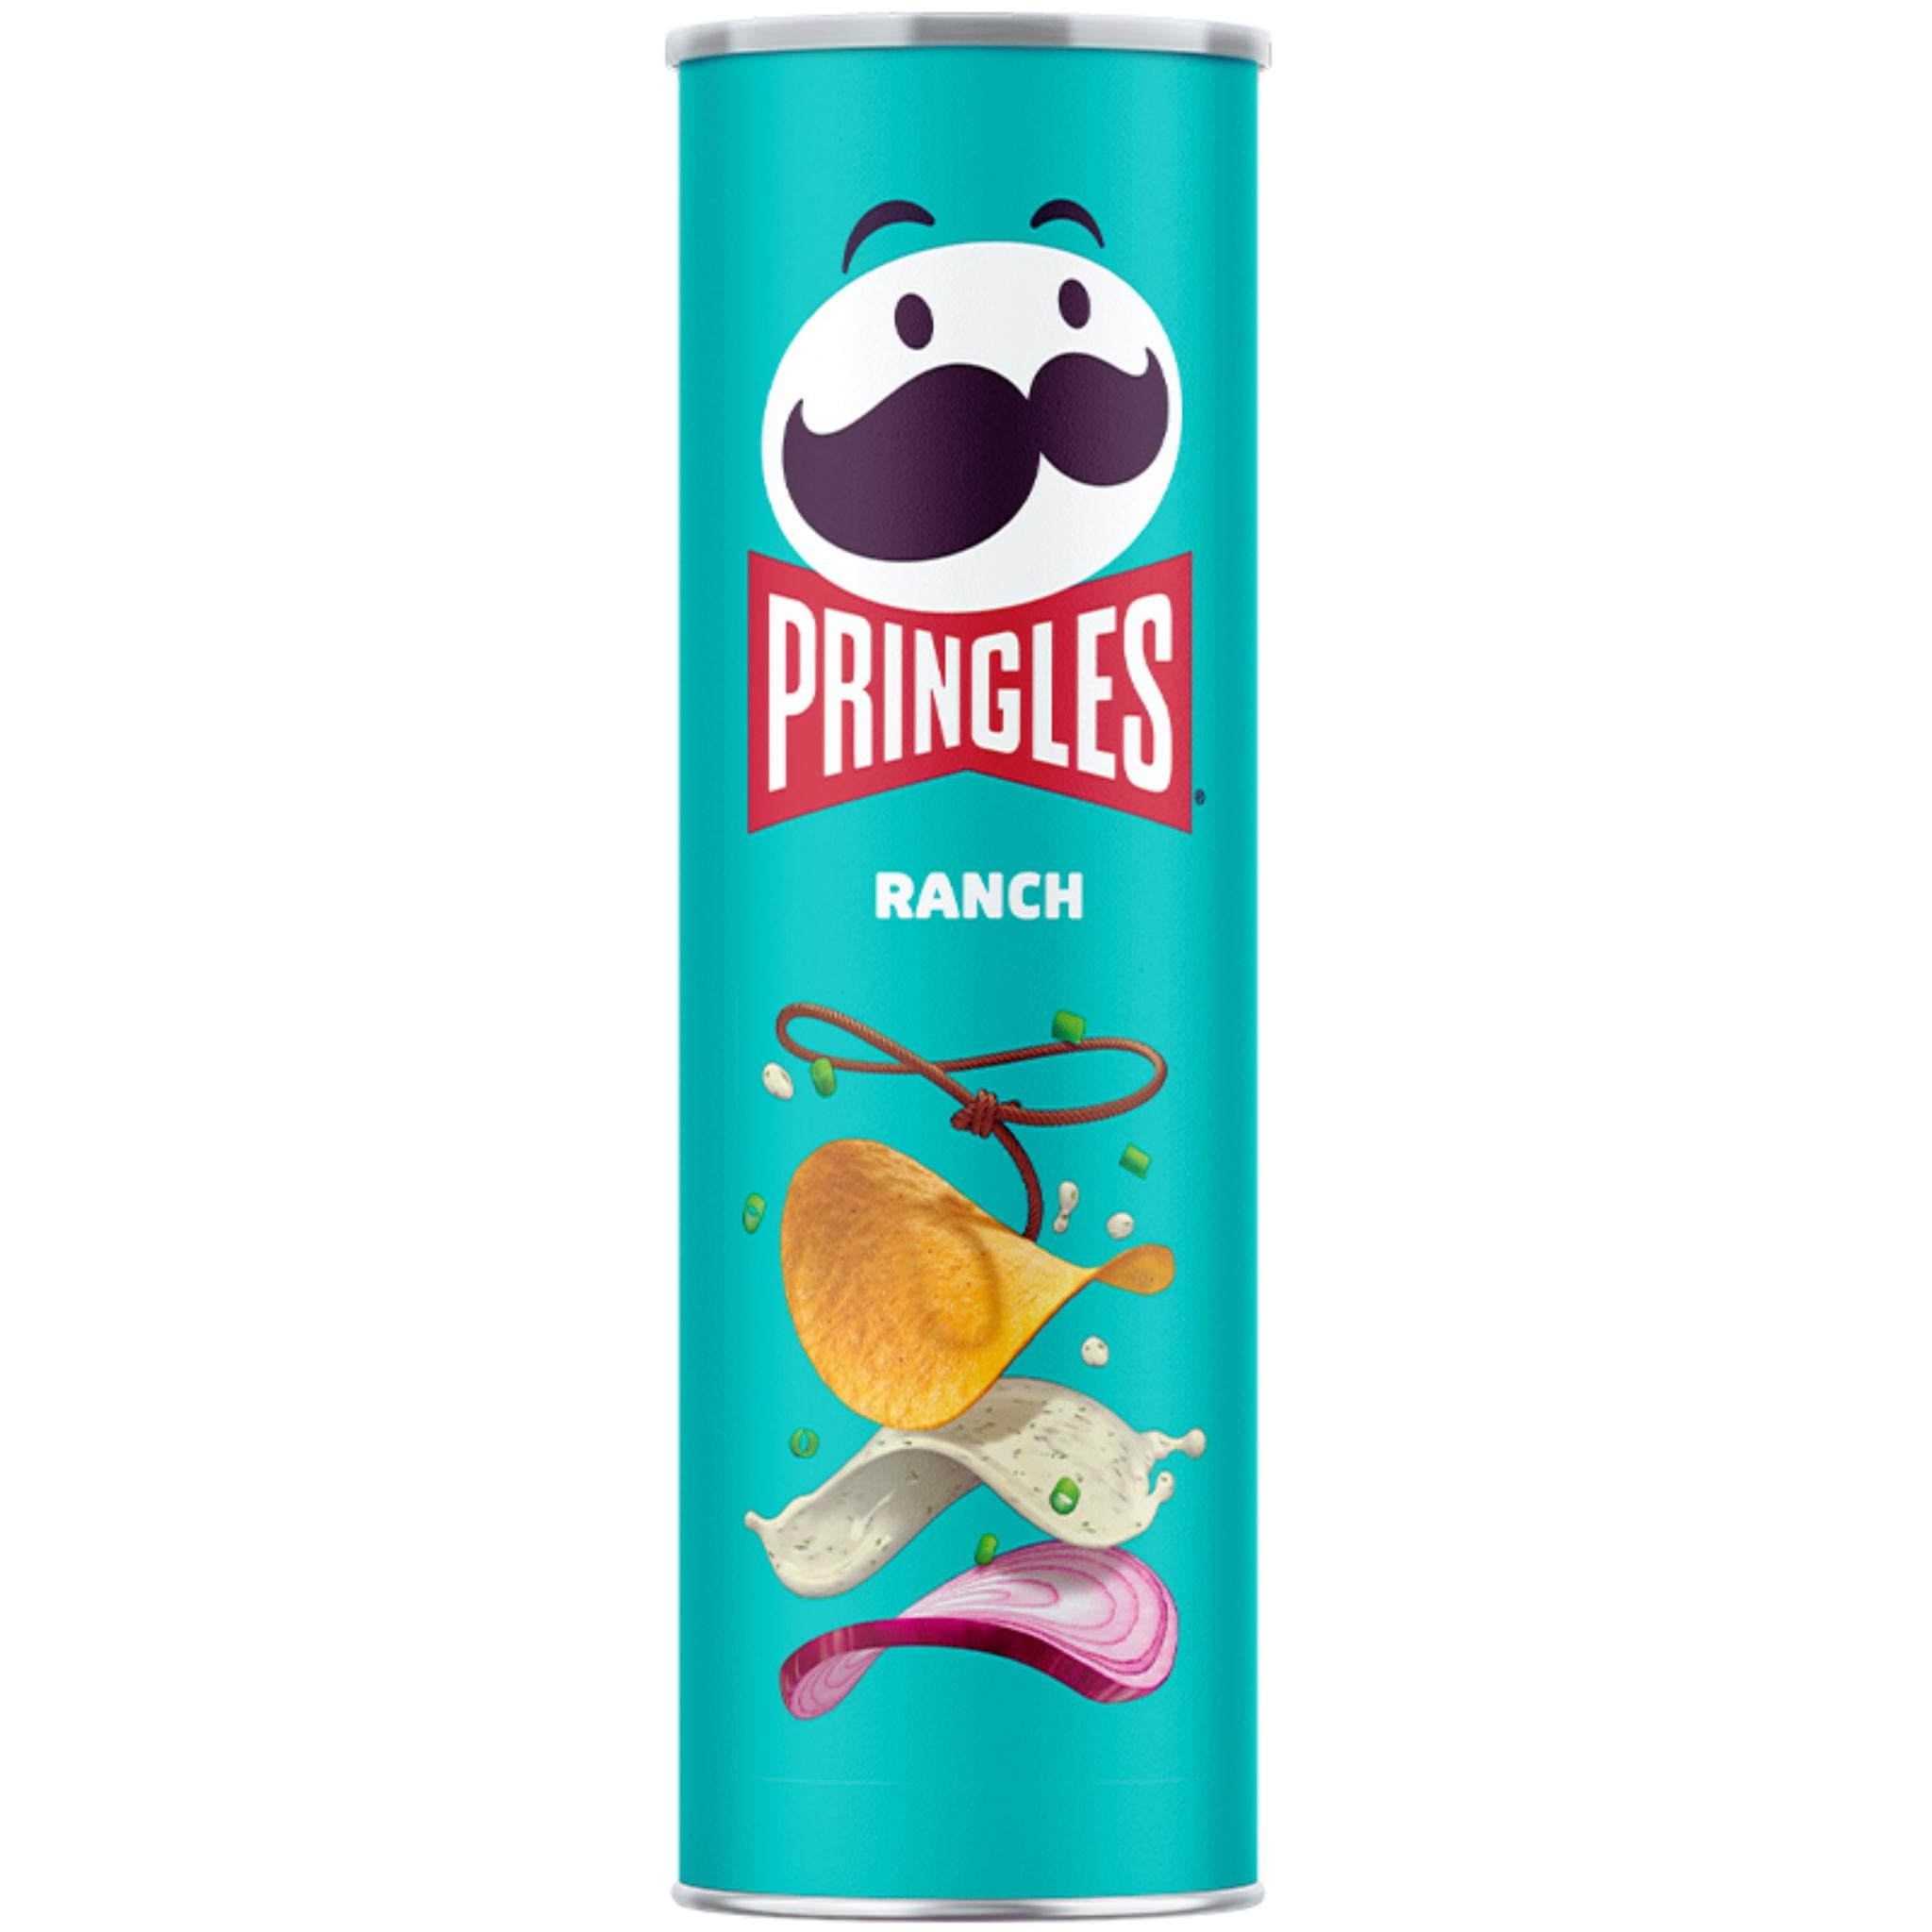 Pringles Ranch - 158g (USA)